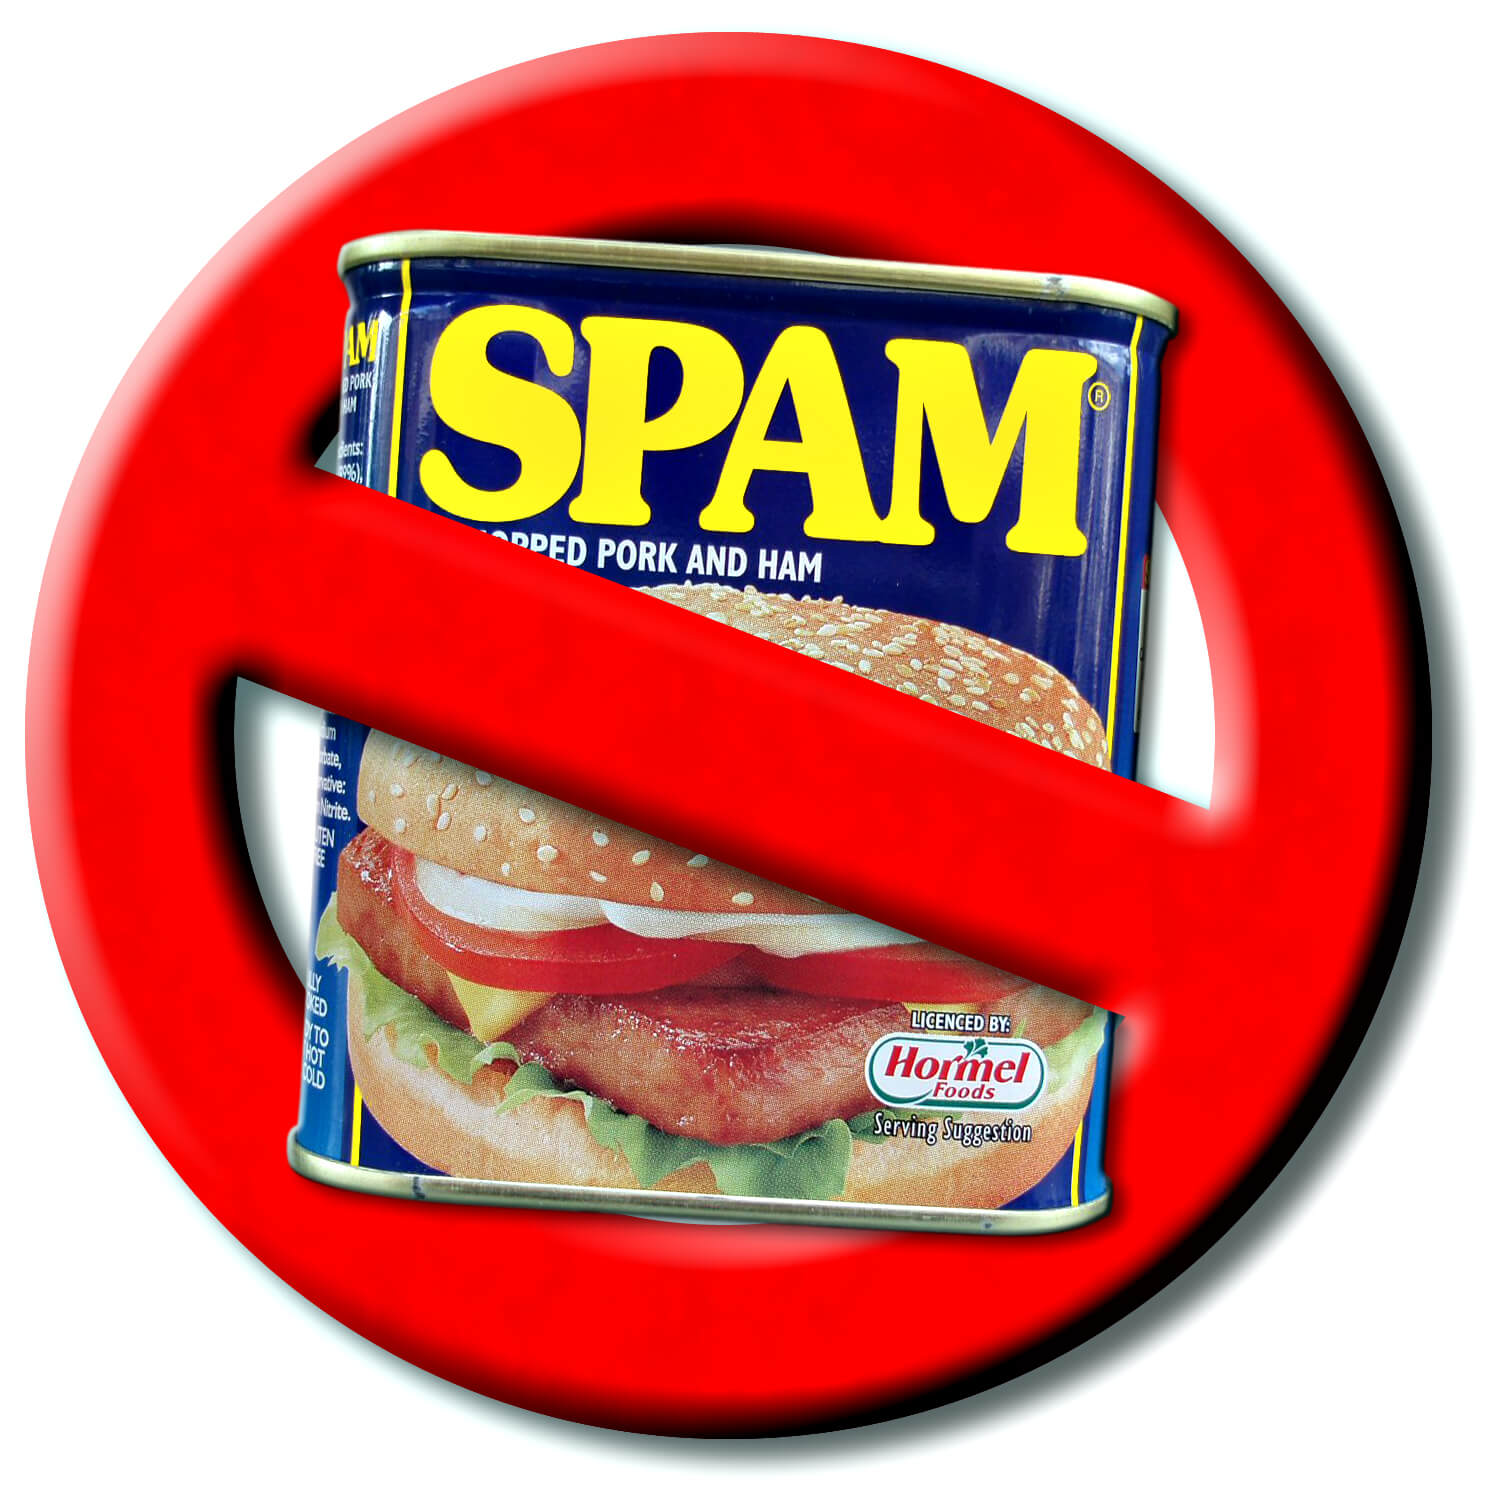 T me spammed ccs. Спам. Реклама Spam. Реклама Spam ветчины. Спам консервы.